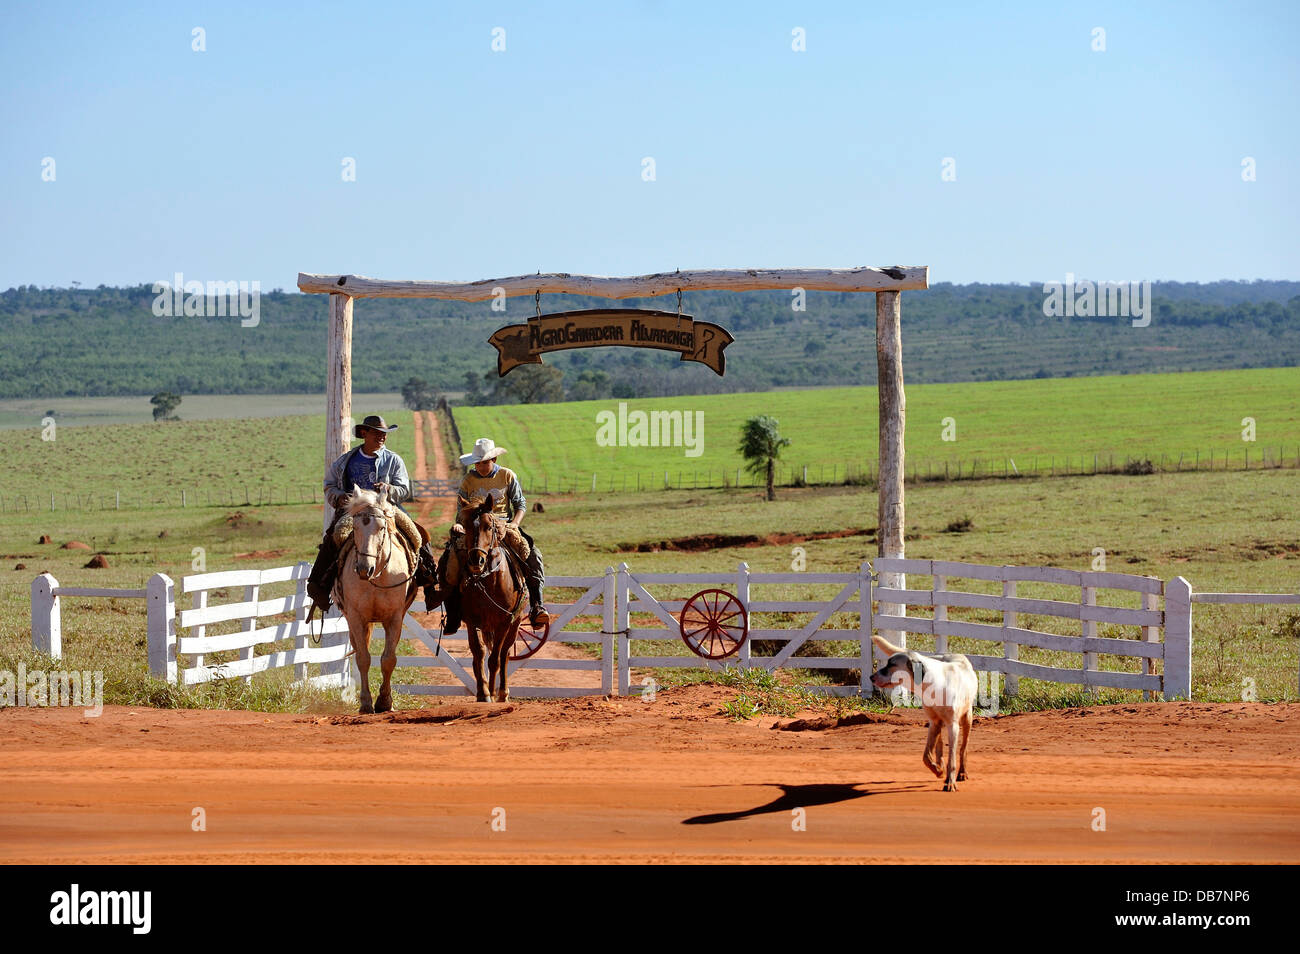 Dos hombres a caballo, vaqueros, entrada de una Fazenda o rancho de un terrateniente Foto de stock